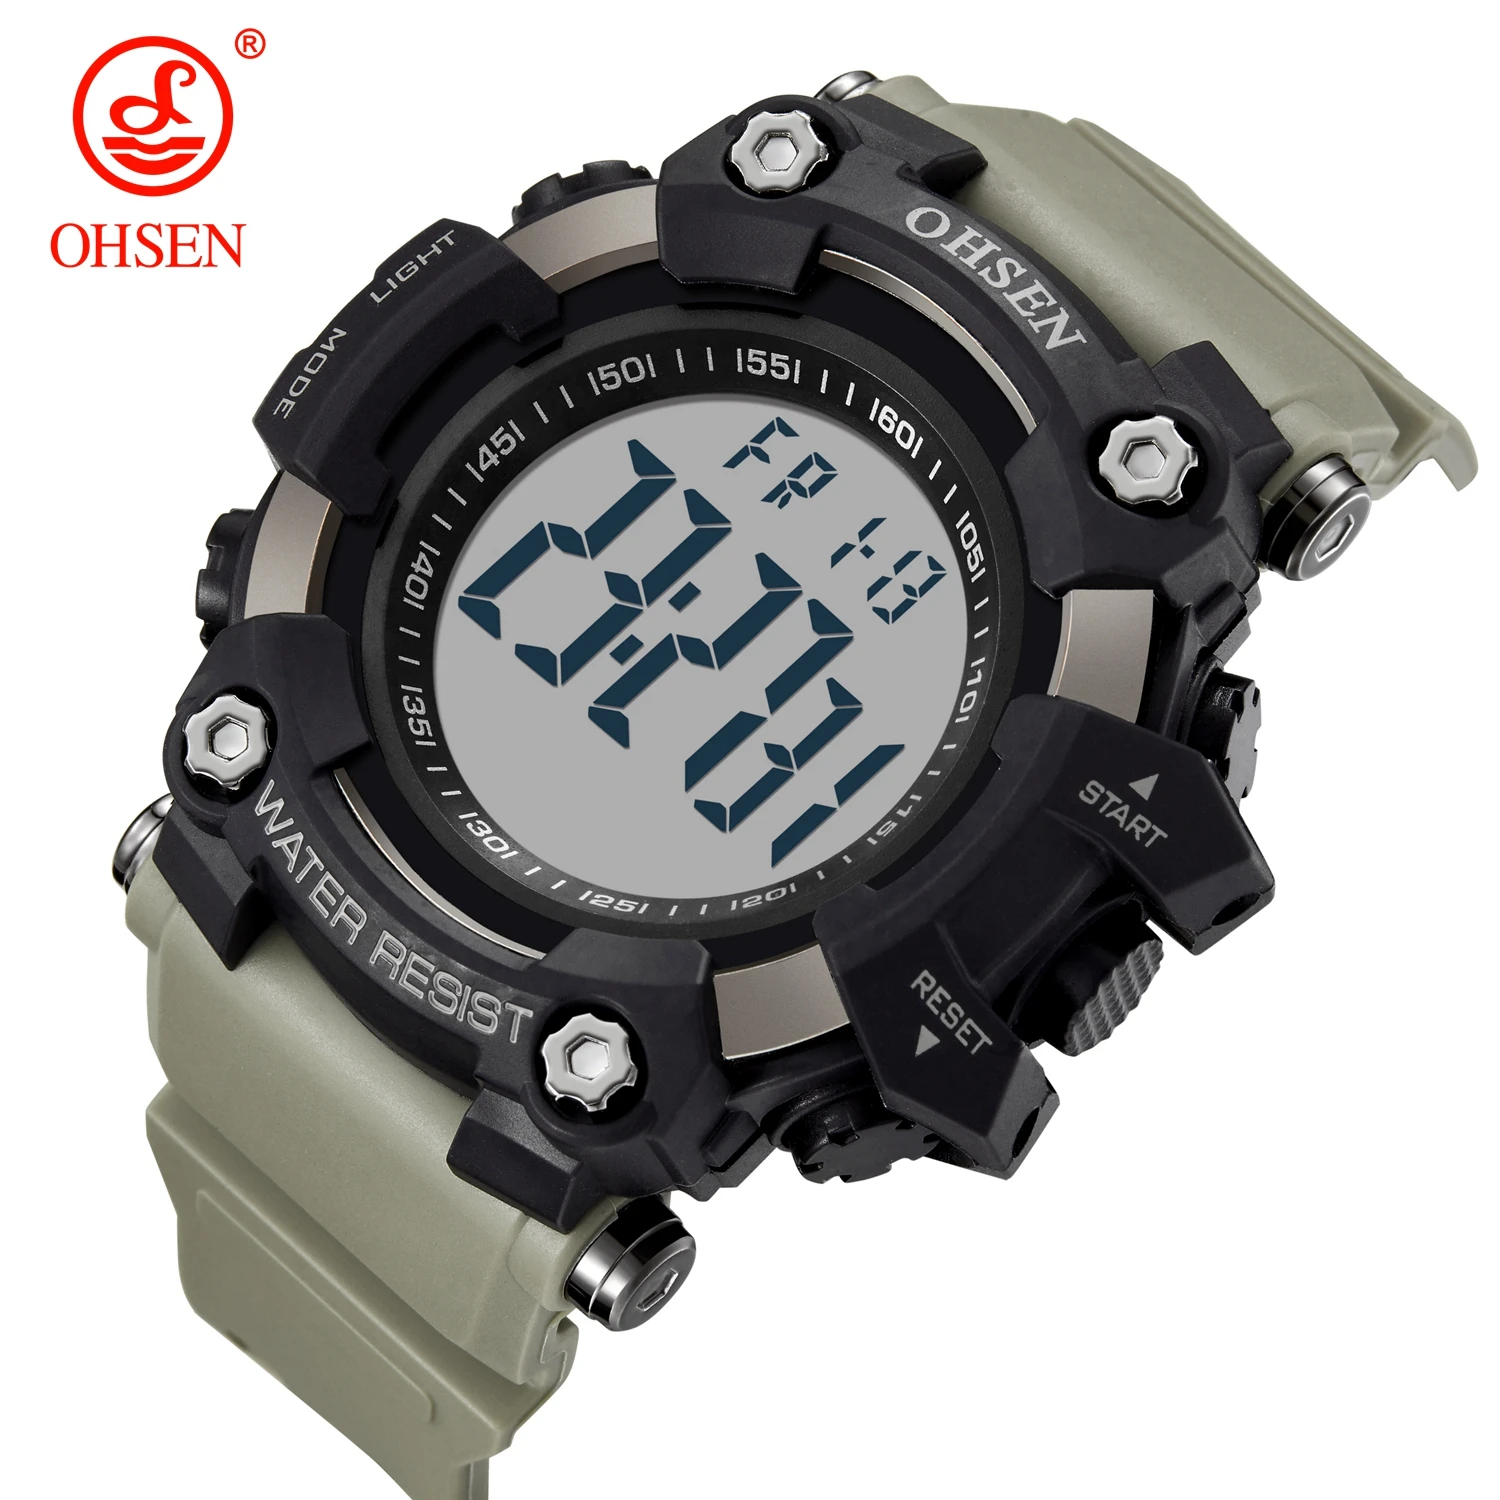 

Digital Watches for Men 50M Khaki Tactical Wristwatch Big Dial Electronic Military Watch Fashion LED Clocks Alarm Stopwatch